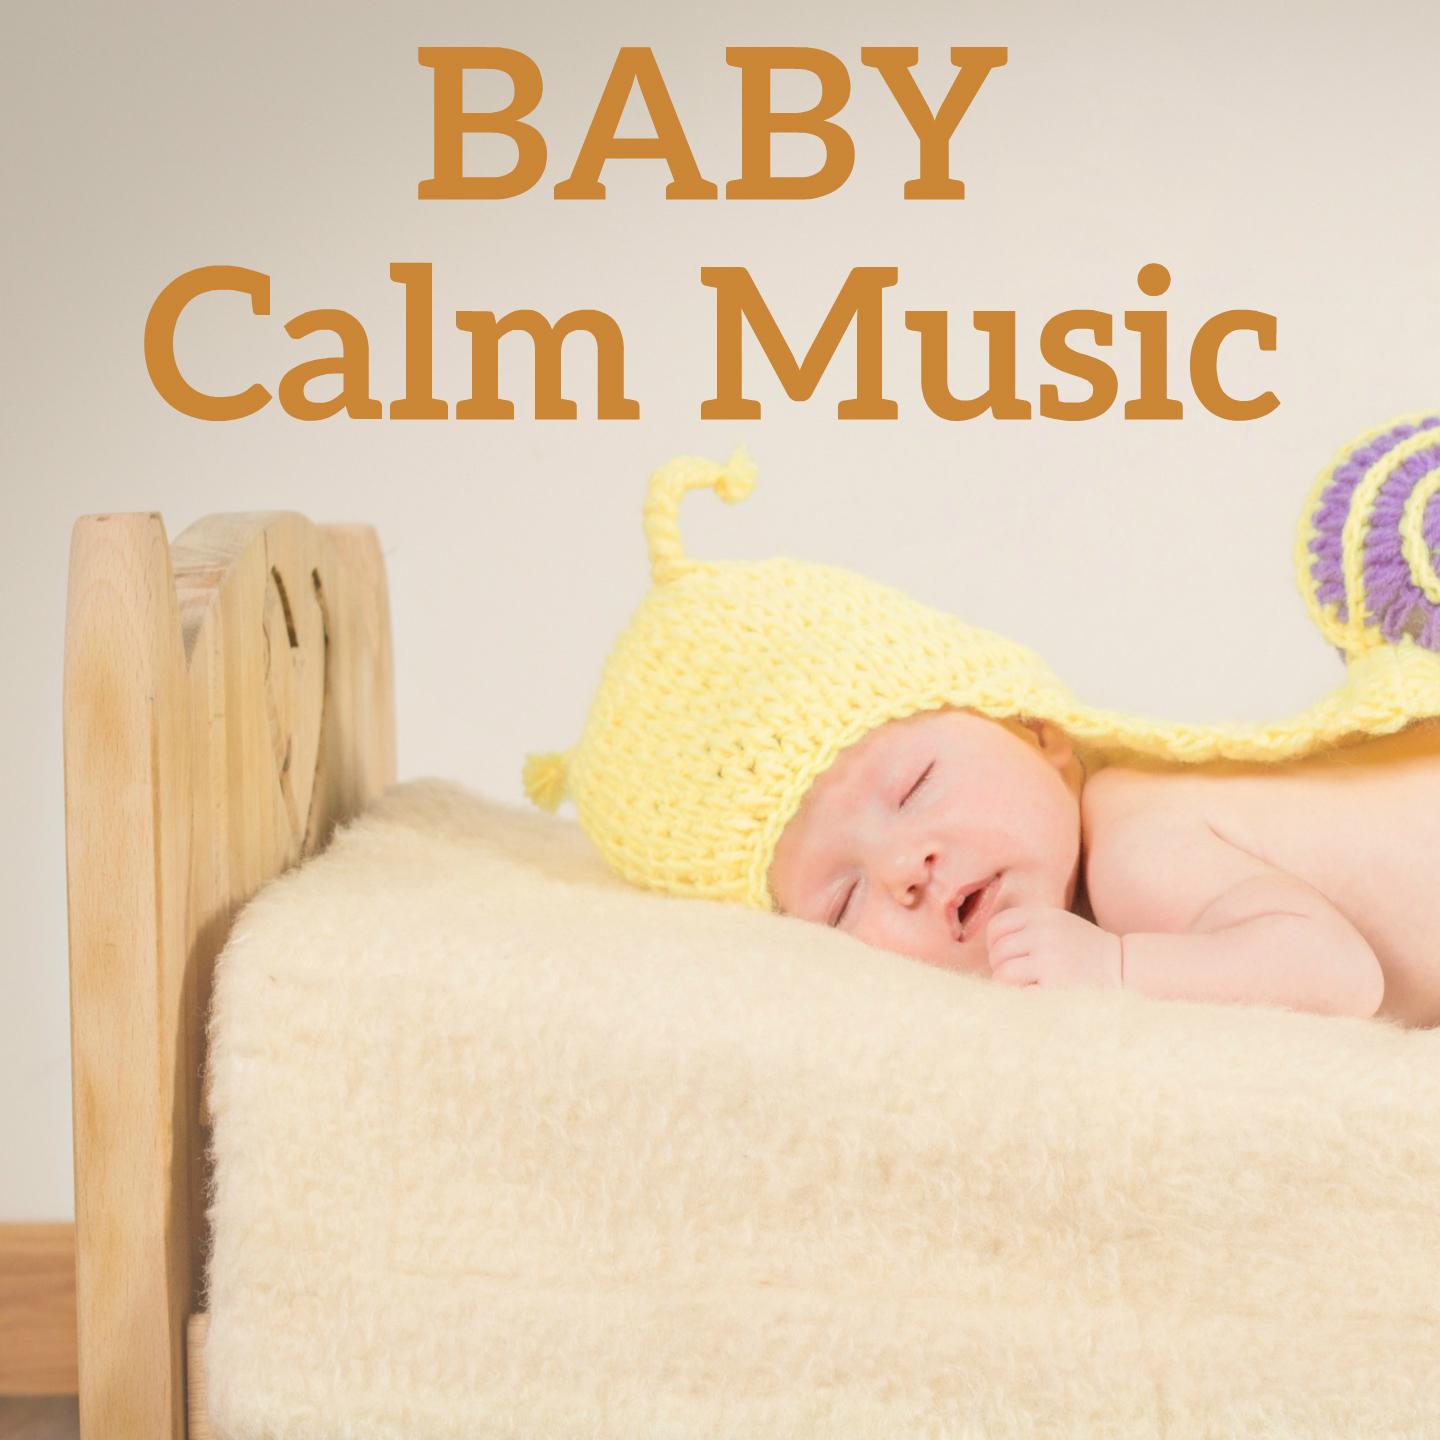 Baby Calm Music